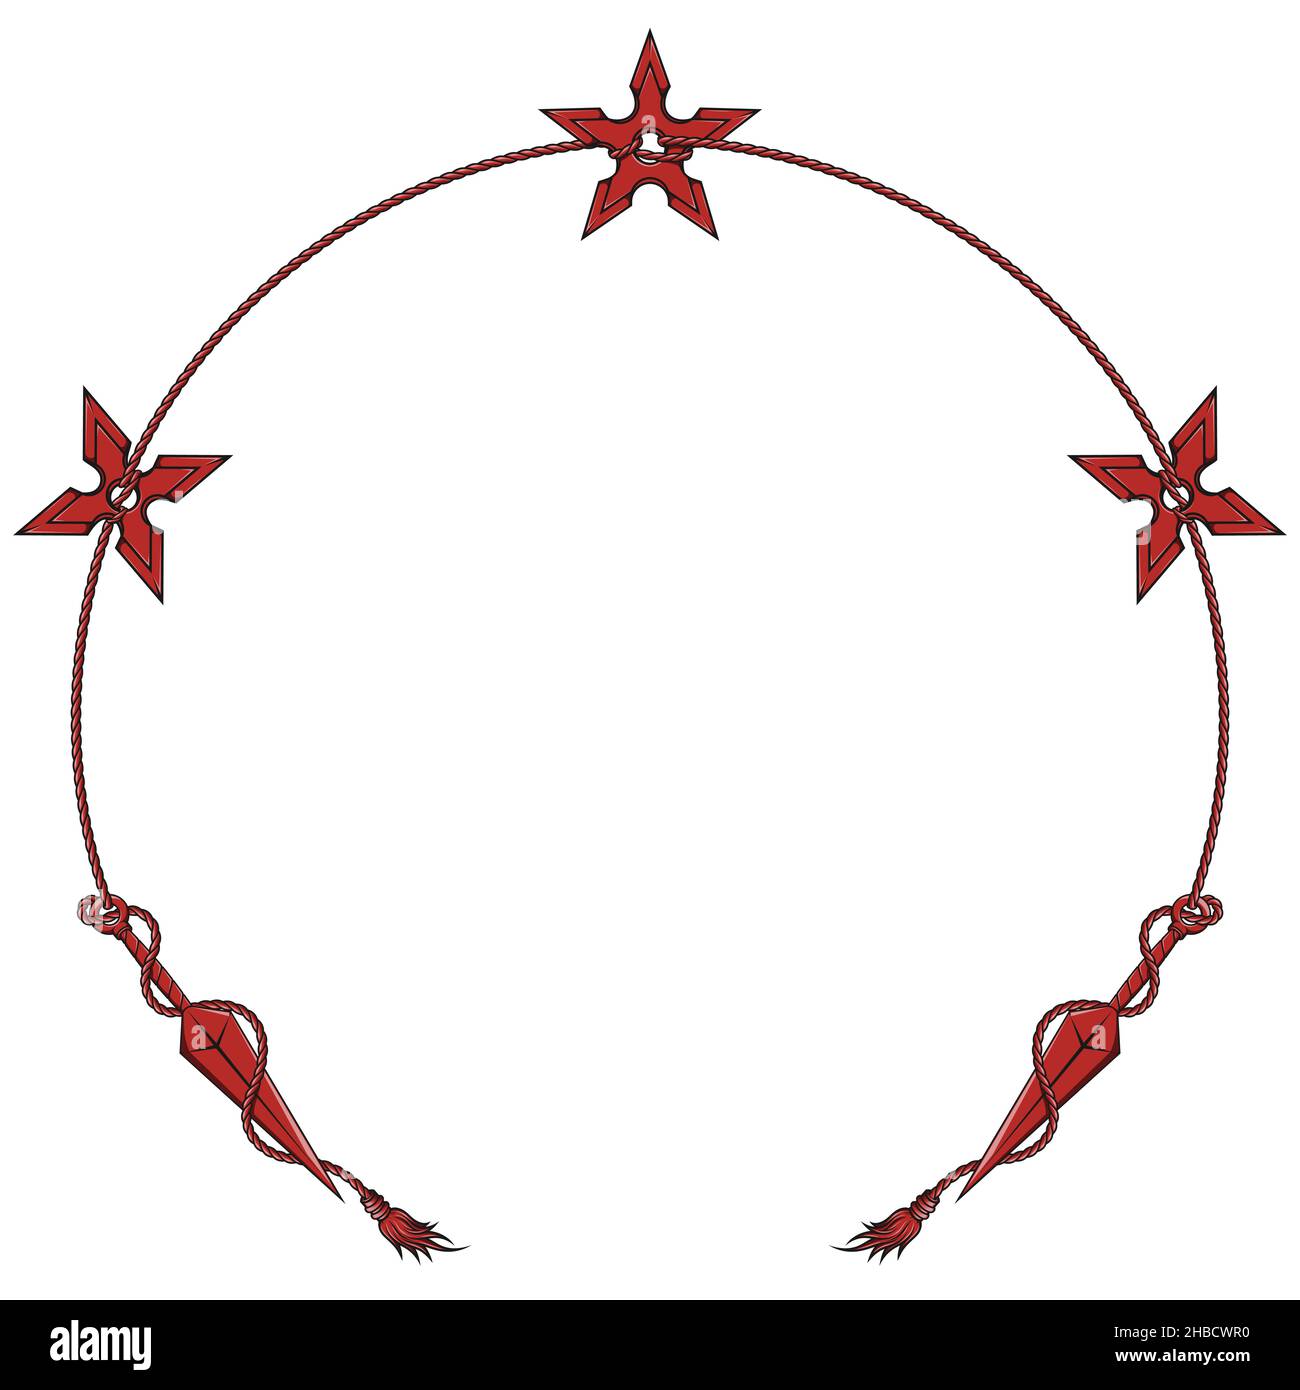 Kunai and Shuriken ninja weapon design tied in circle-shaped rope Stock Vector